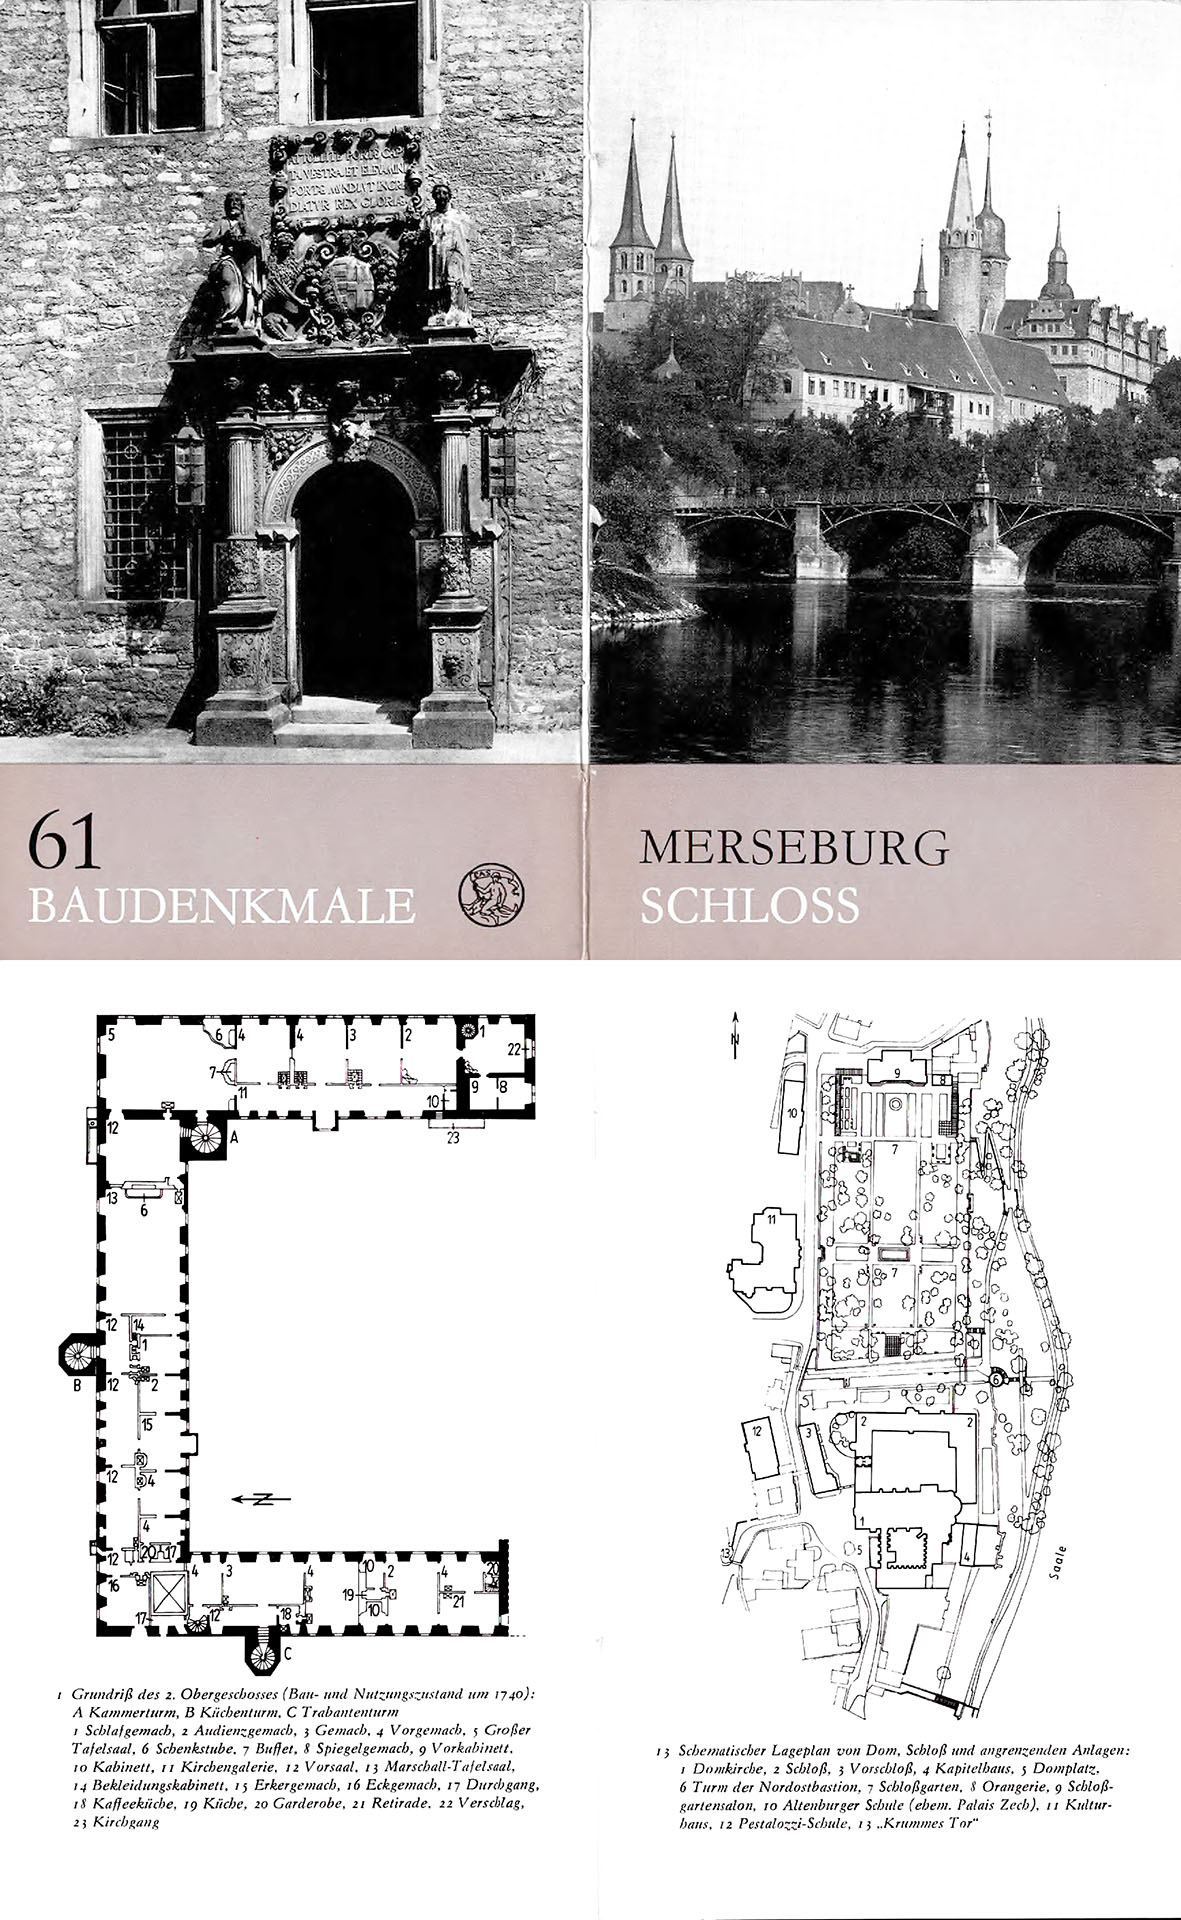 Merseburg - Schloss - Saal, Walter